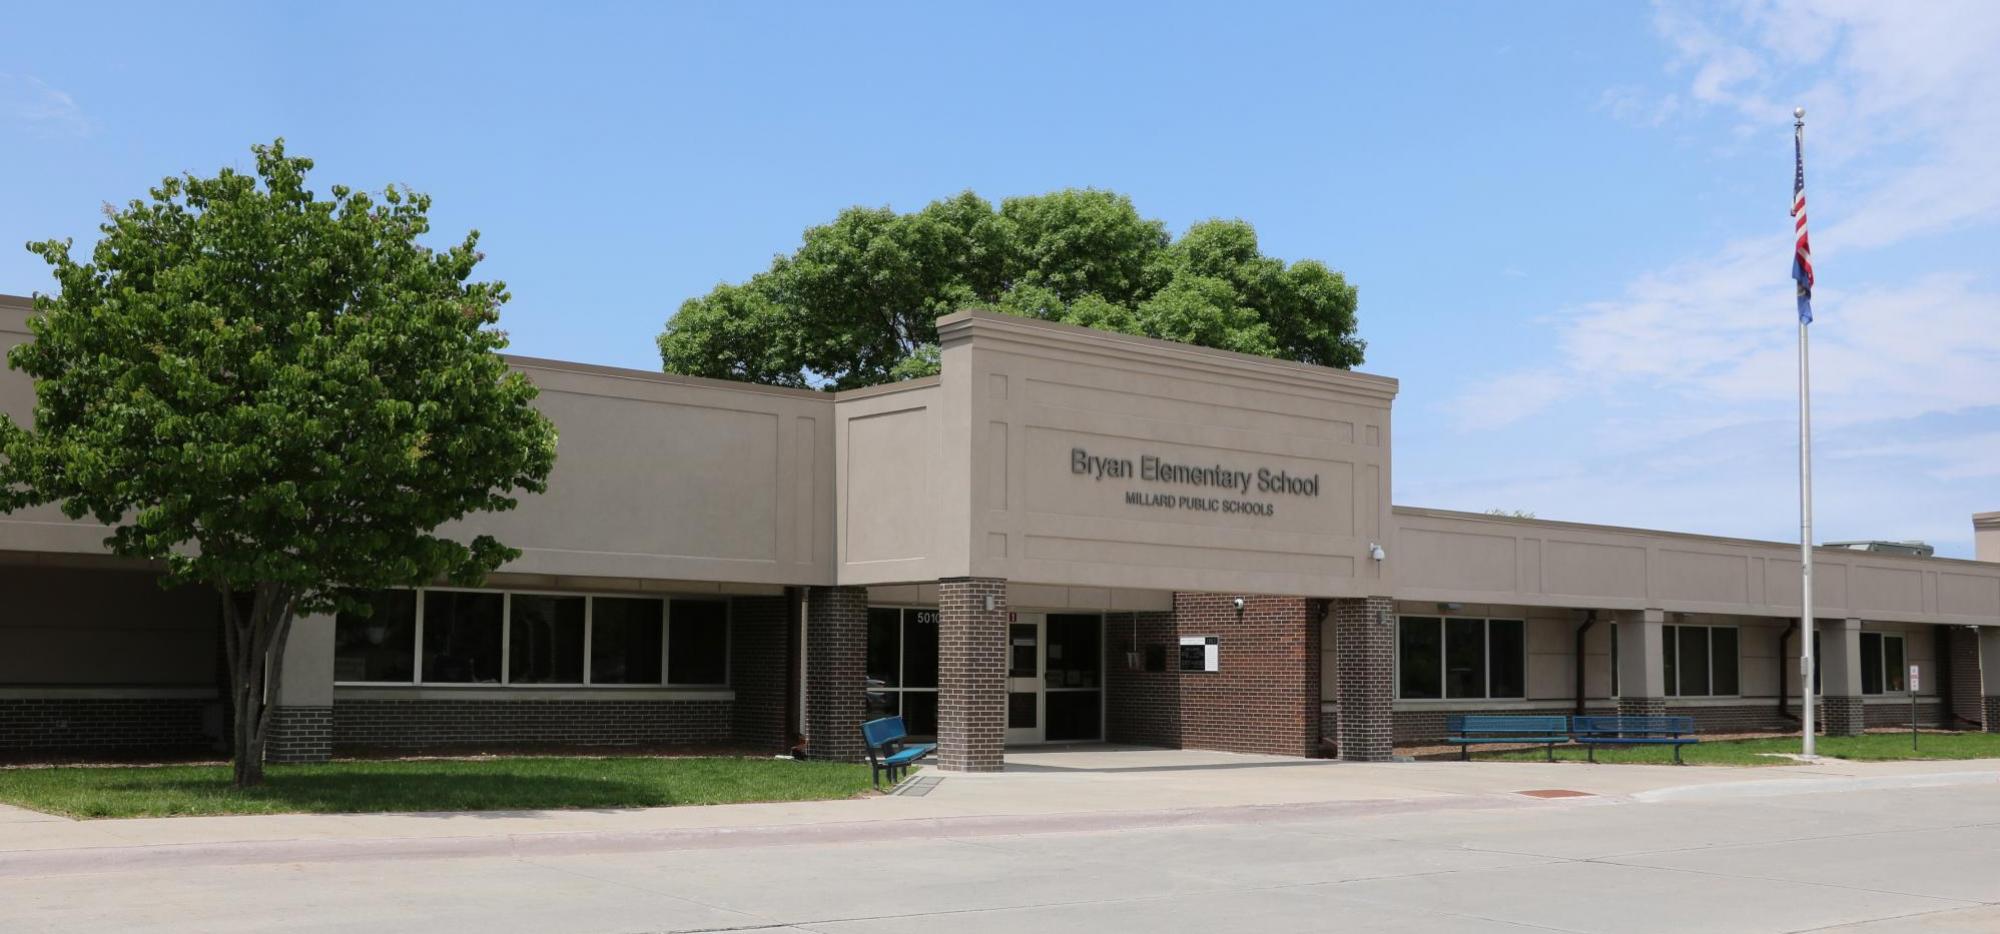 About | Bryan Elementary School - Millard Public Schools